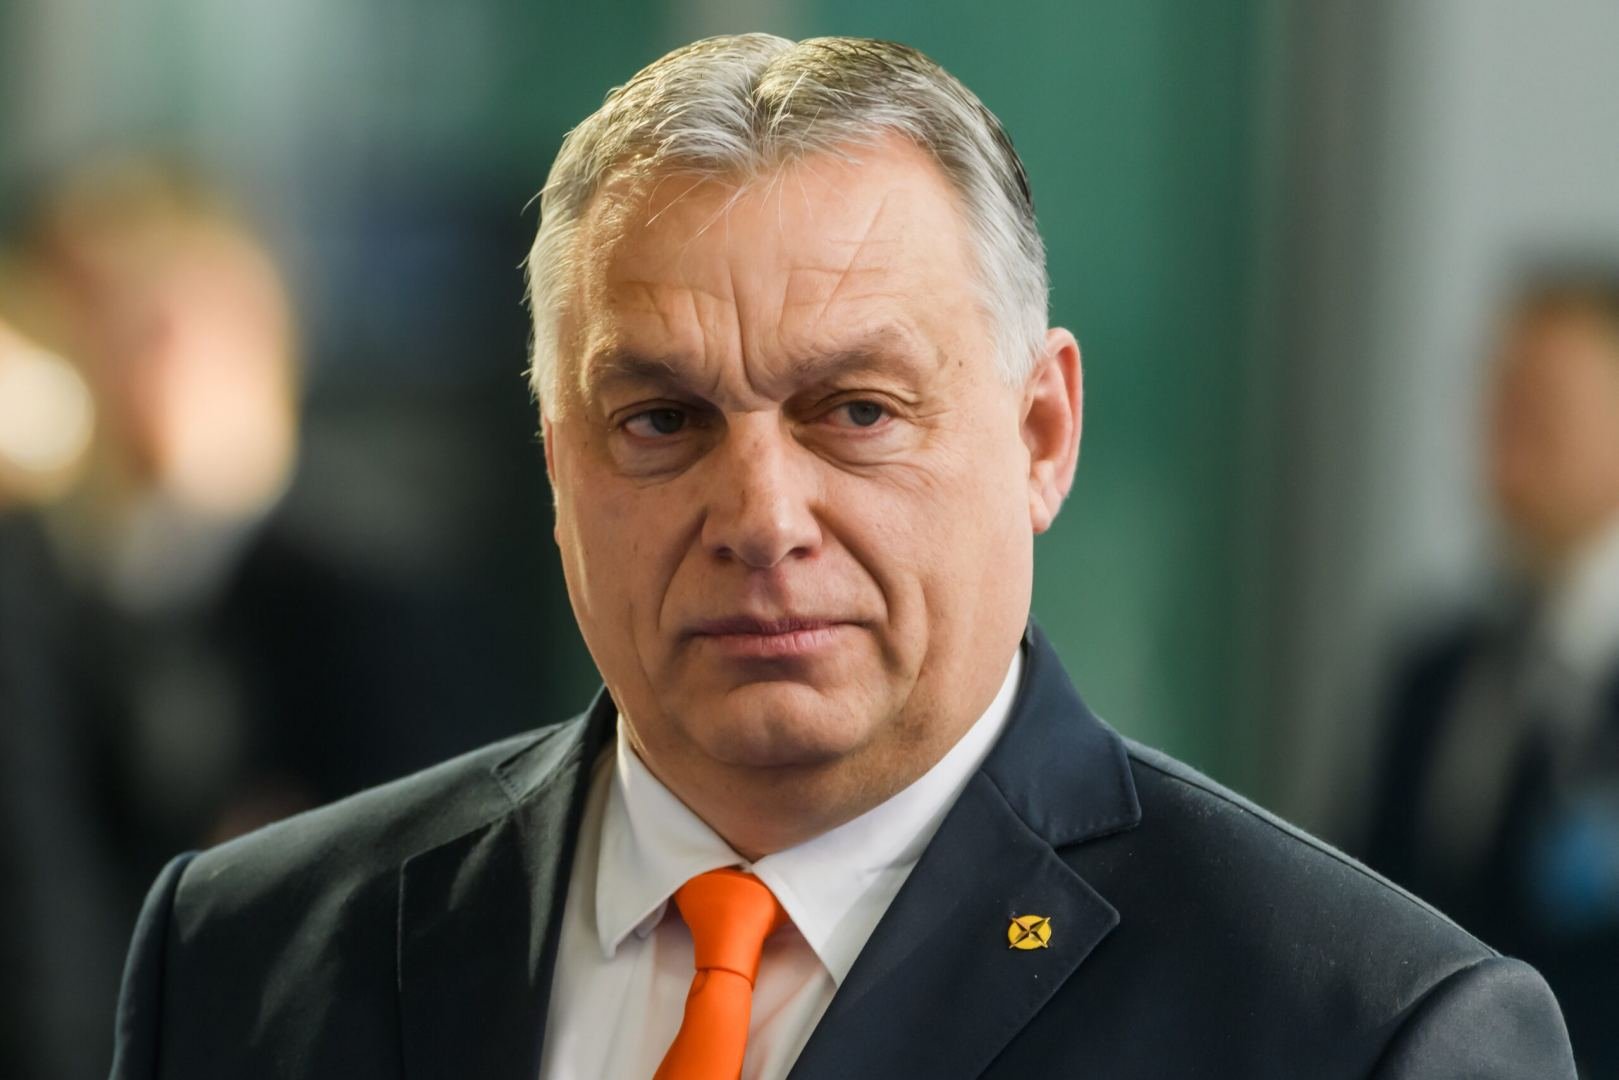 Виктор Орбан поблагодарил Президента Ильхама Алиева за усилия по стабилизации ситуации на Южном Кавказе